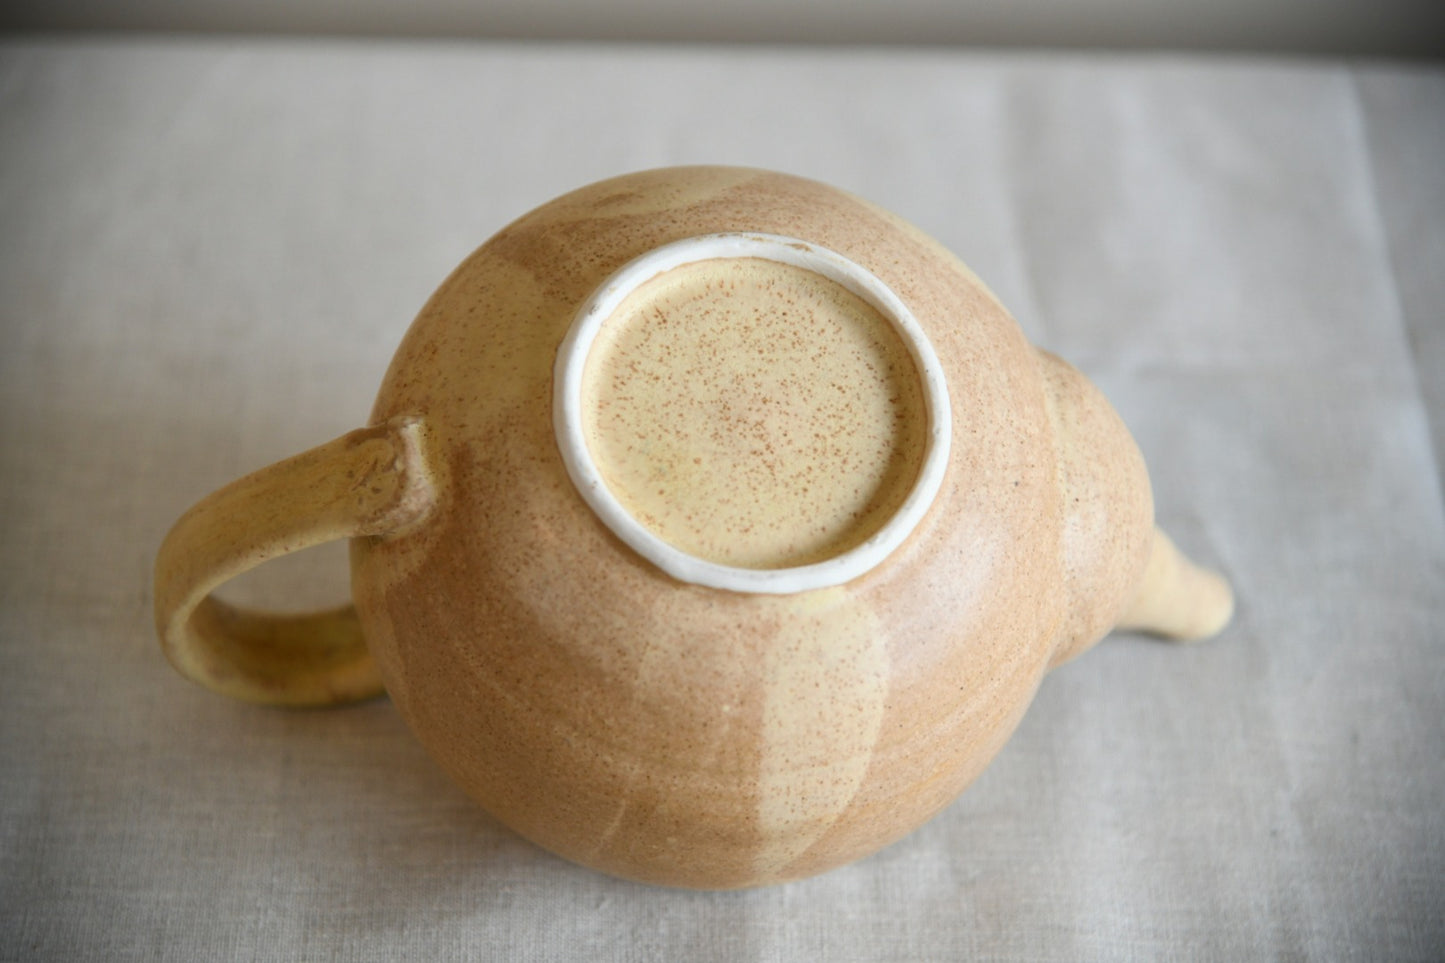 Studio Pottery Teapot